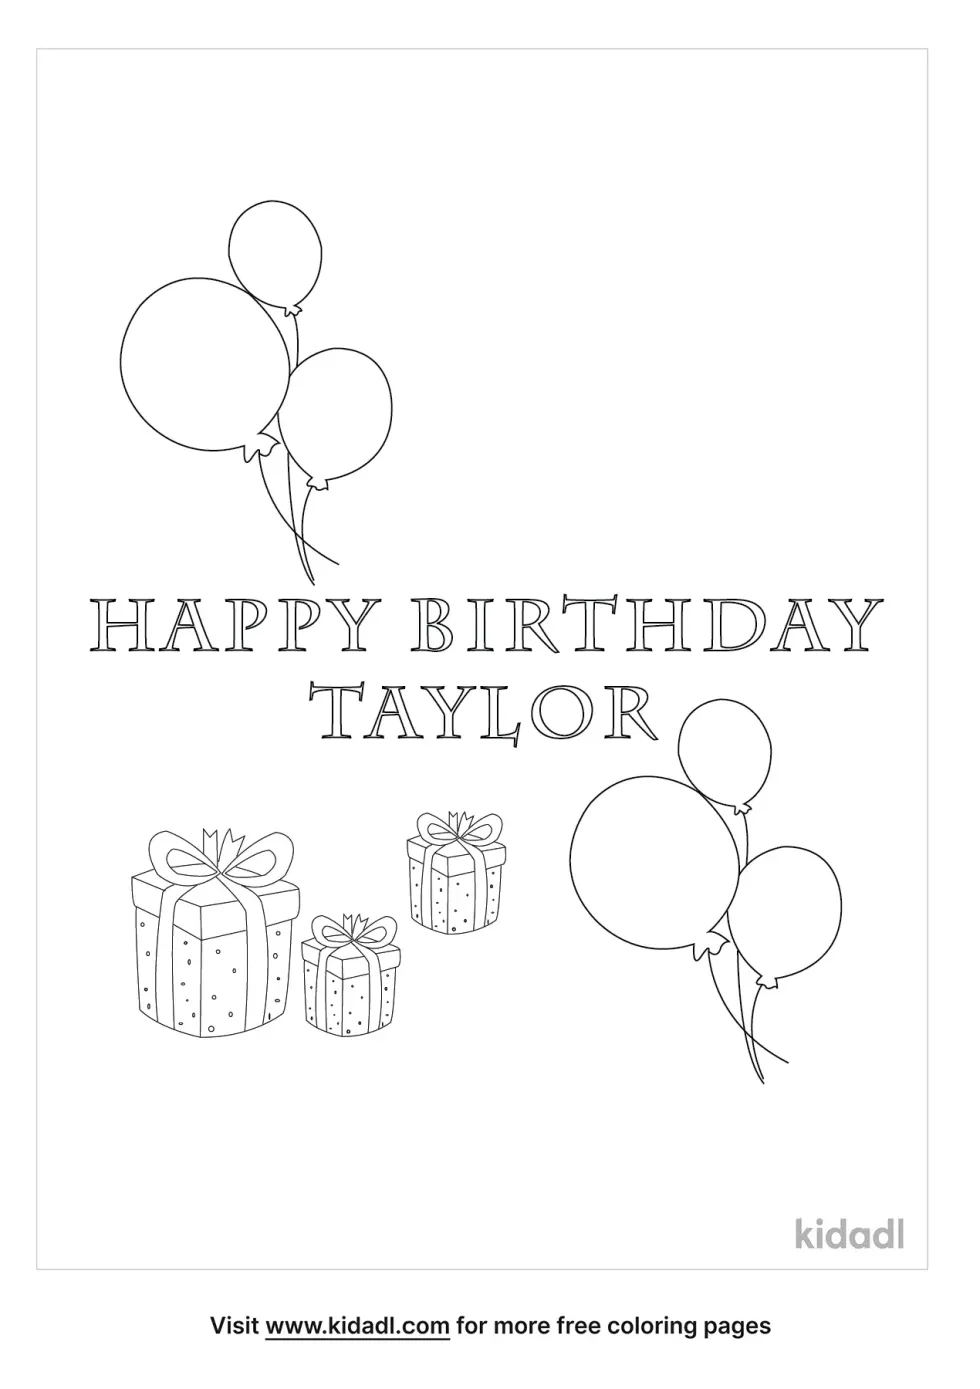 Happy Birthday Taylor Coloring Page